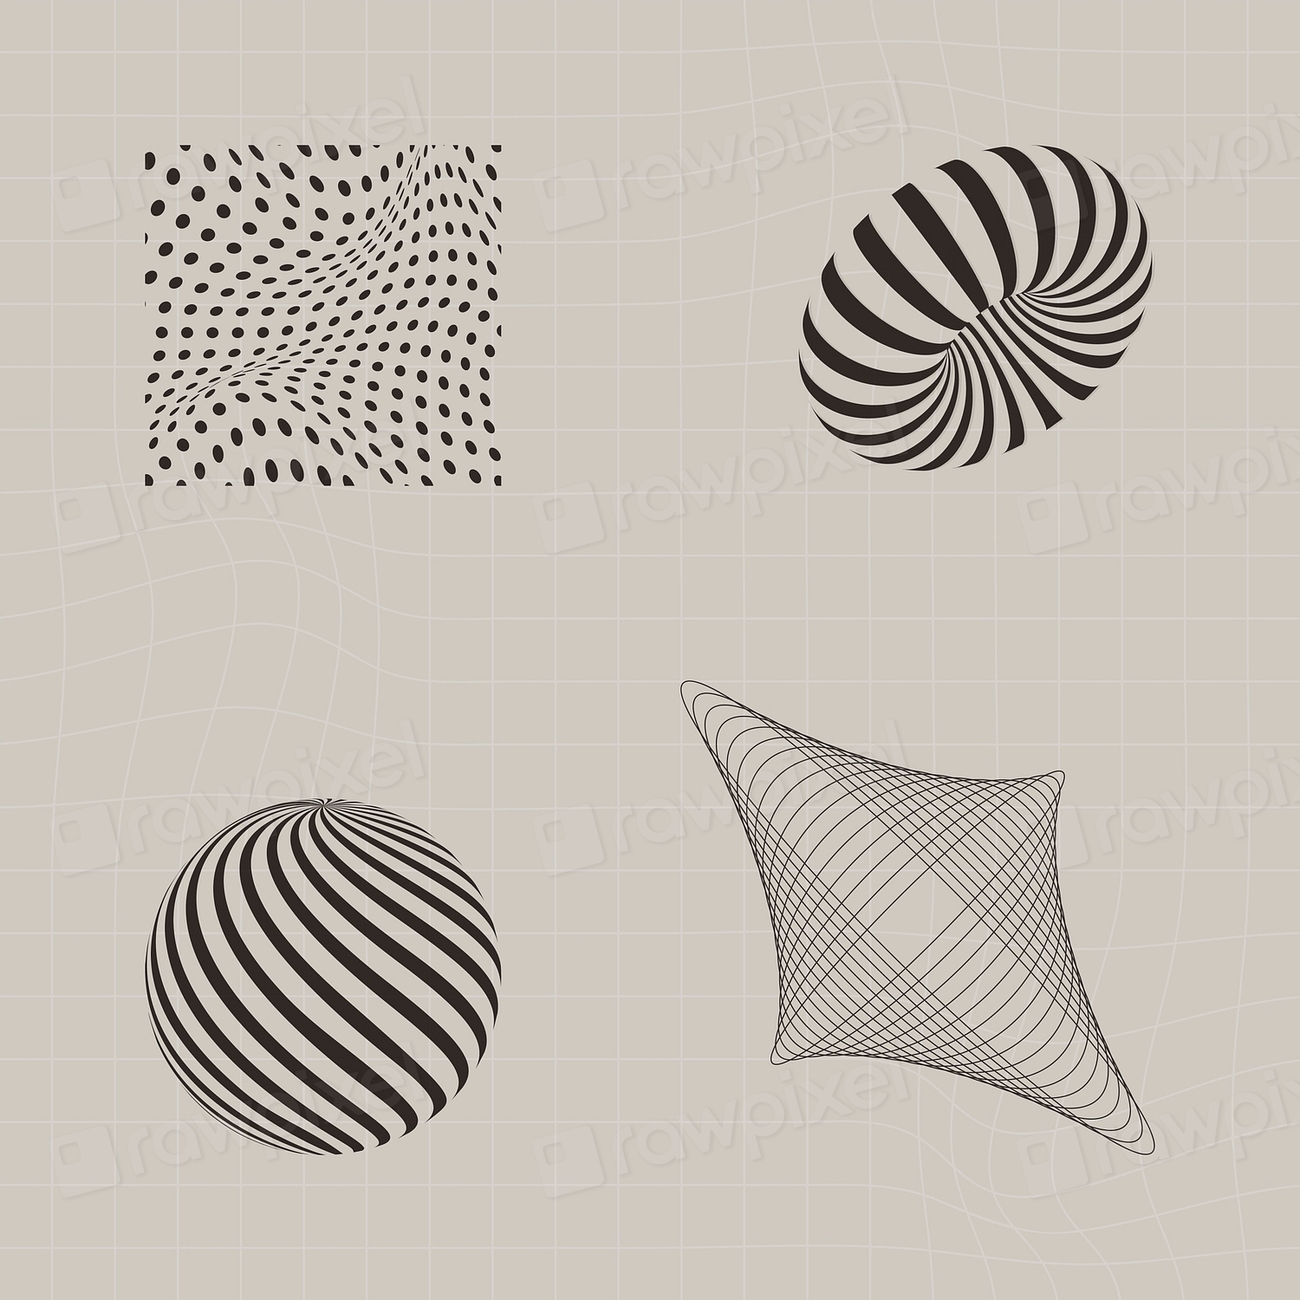 Abstract 3D design elements collection | Premium Vector - rawpixel